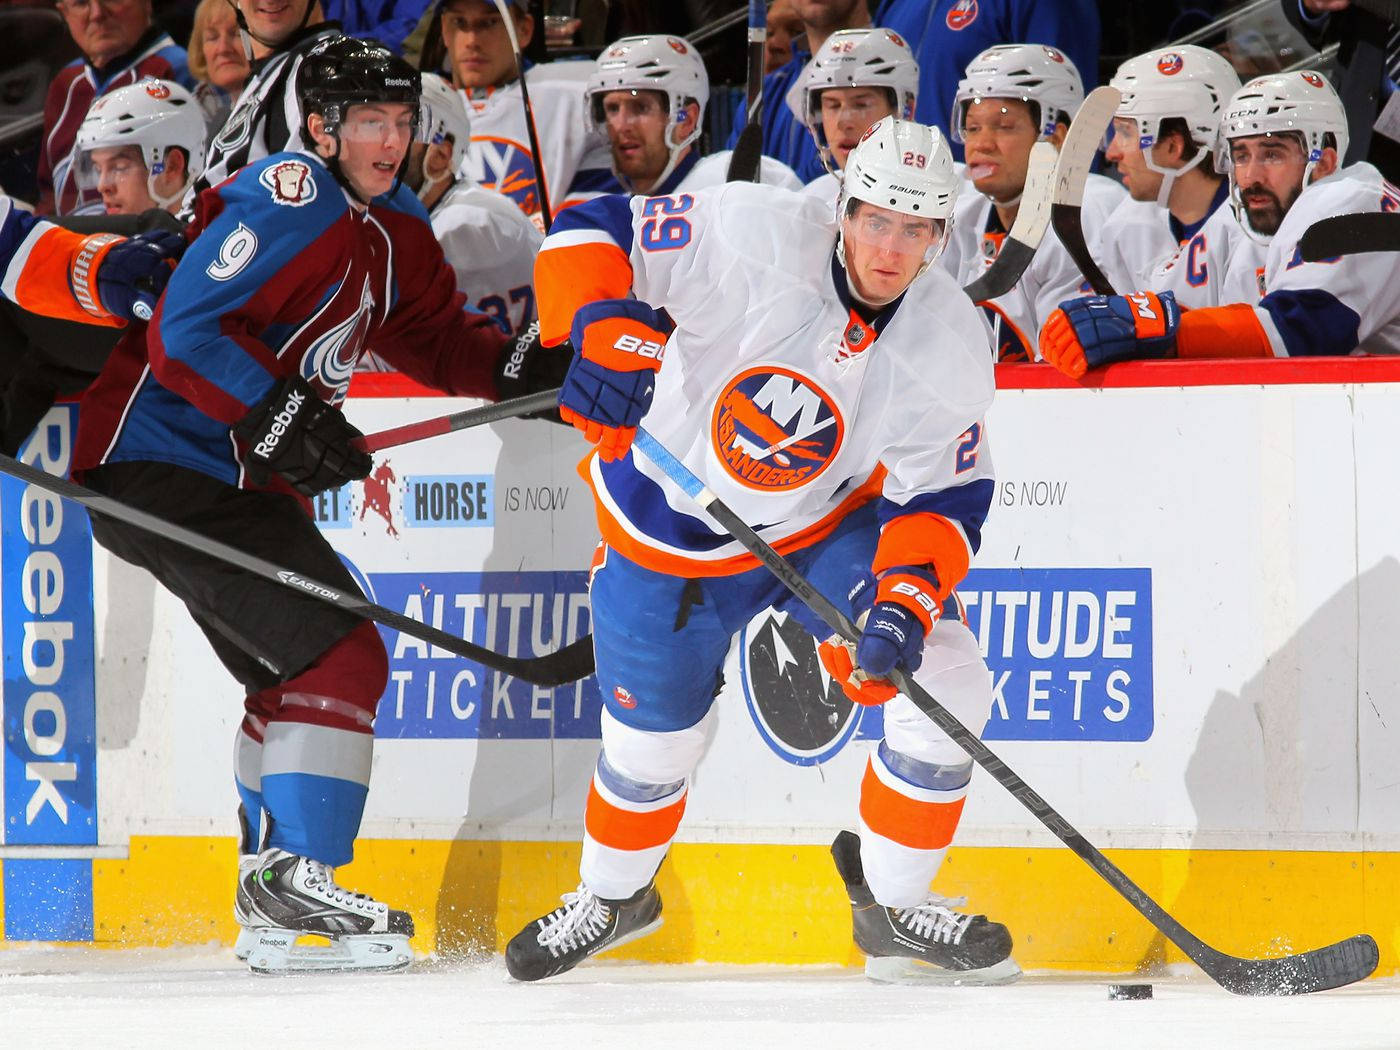 Mattduchene Is A Professional Ice Hockey Player. The Islanders Refers To The New York Islanders, A Professional Ice Hockey Team. Fondo de pantalla